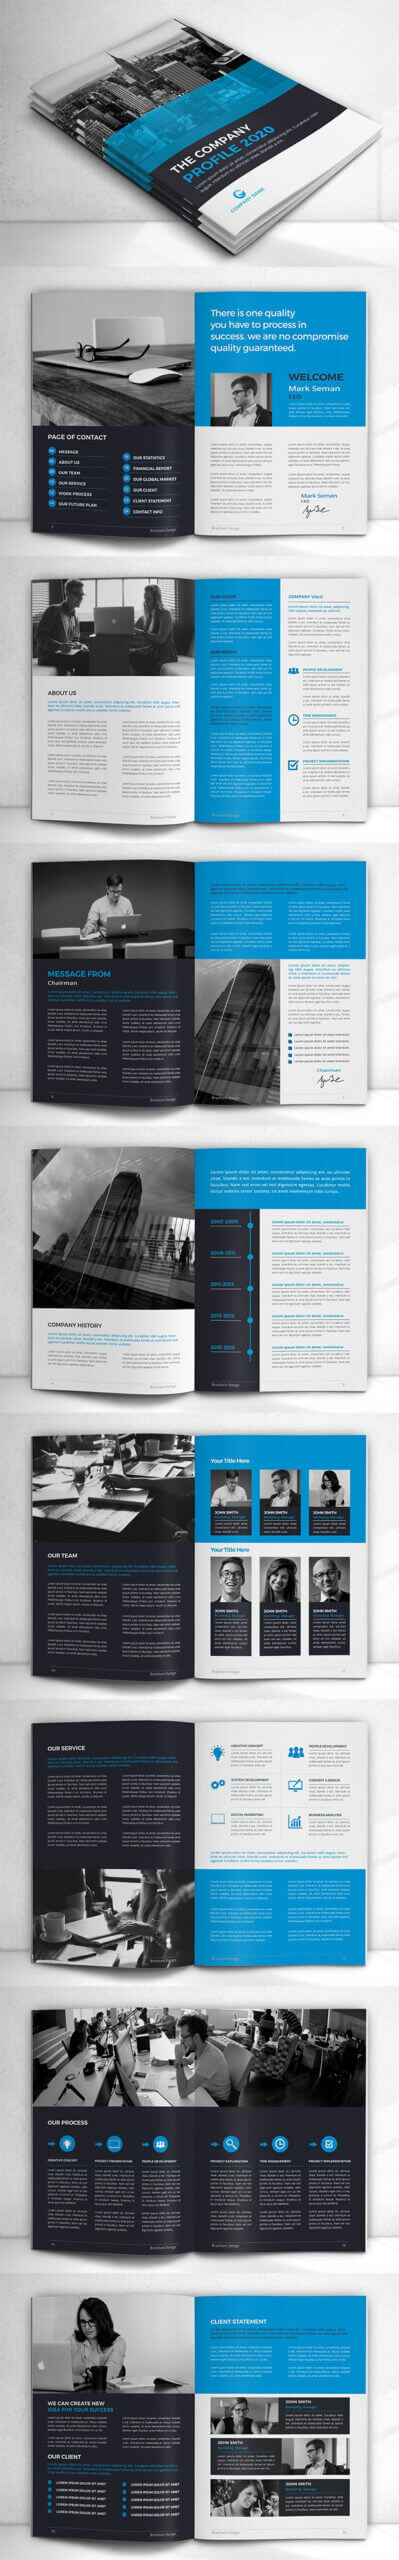 Creative Brochure Templates | Design | Graphic Design Junction Within Engineering Brochure Templates